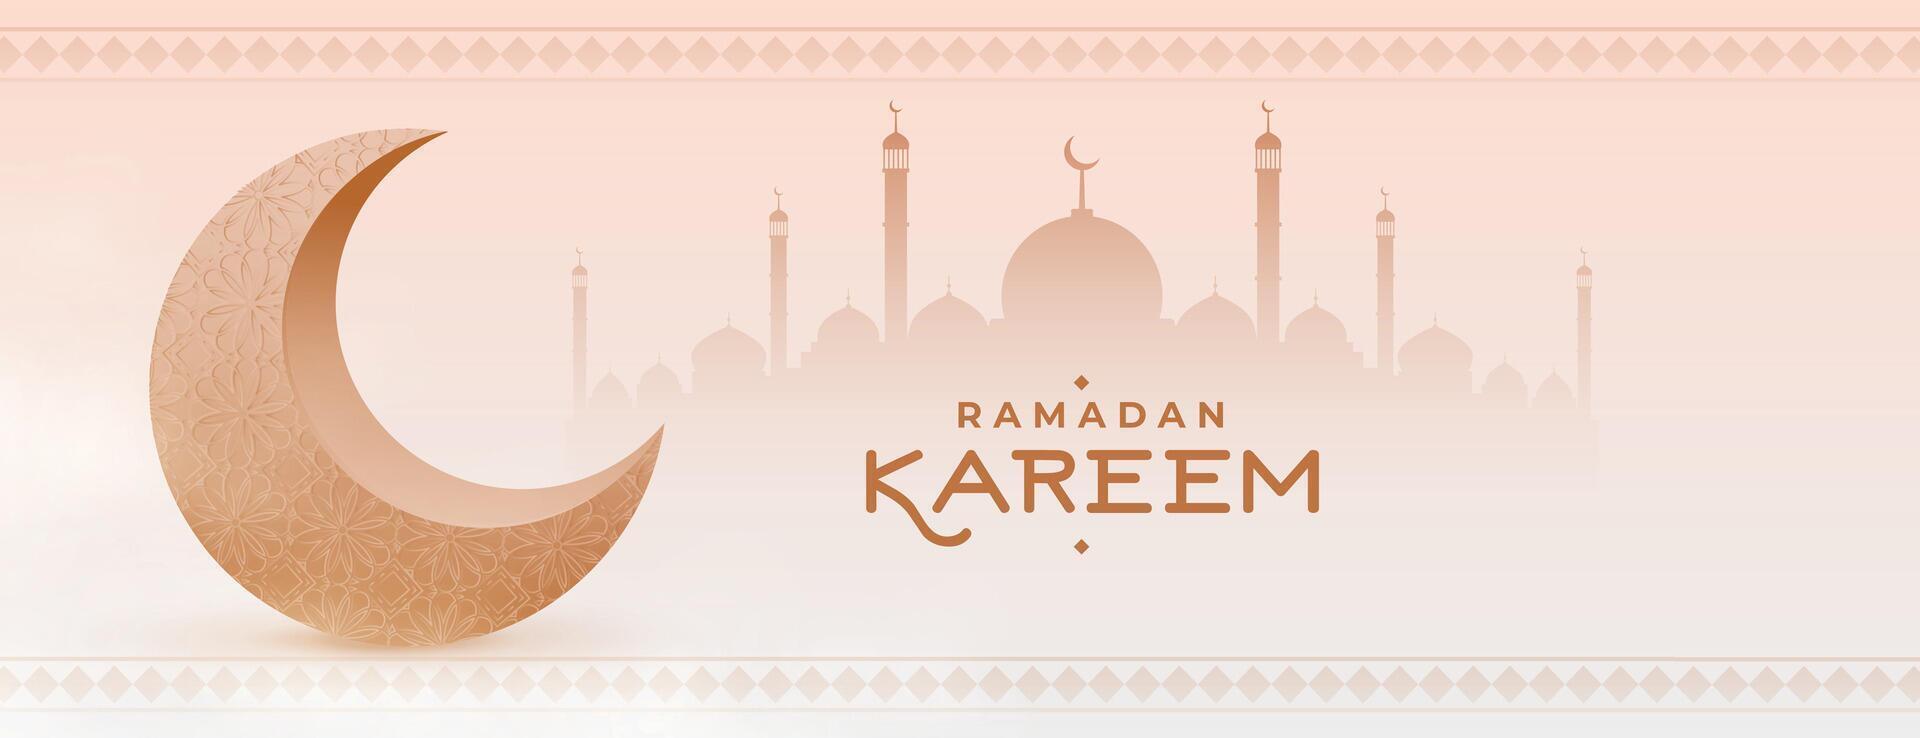 Ramadan kareem e eid mubarak Festival bandiera design vettore